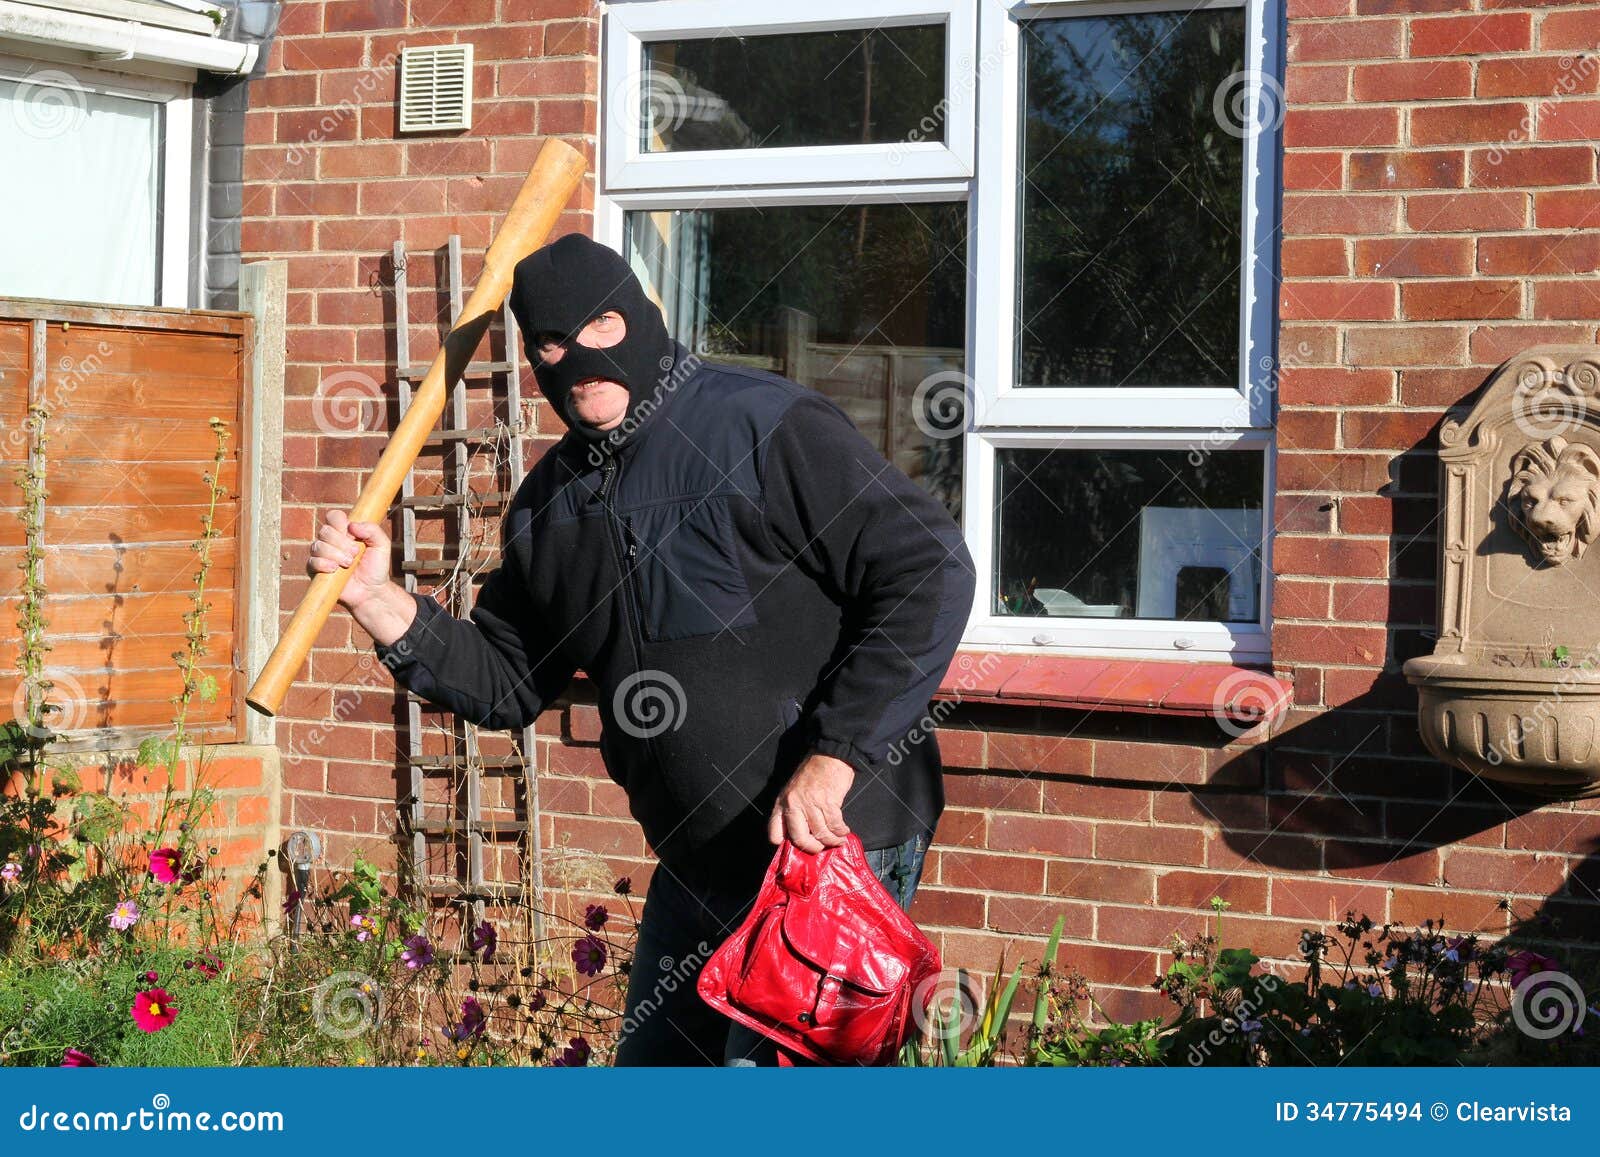 thief-robber-weapon-wearing-ski-mask-wav